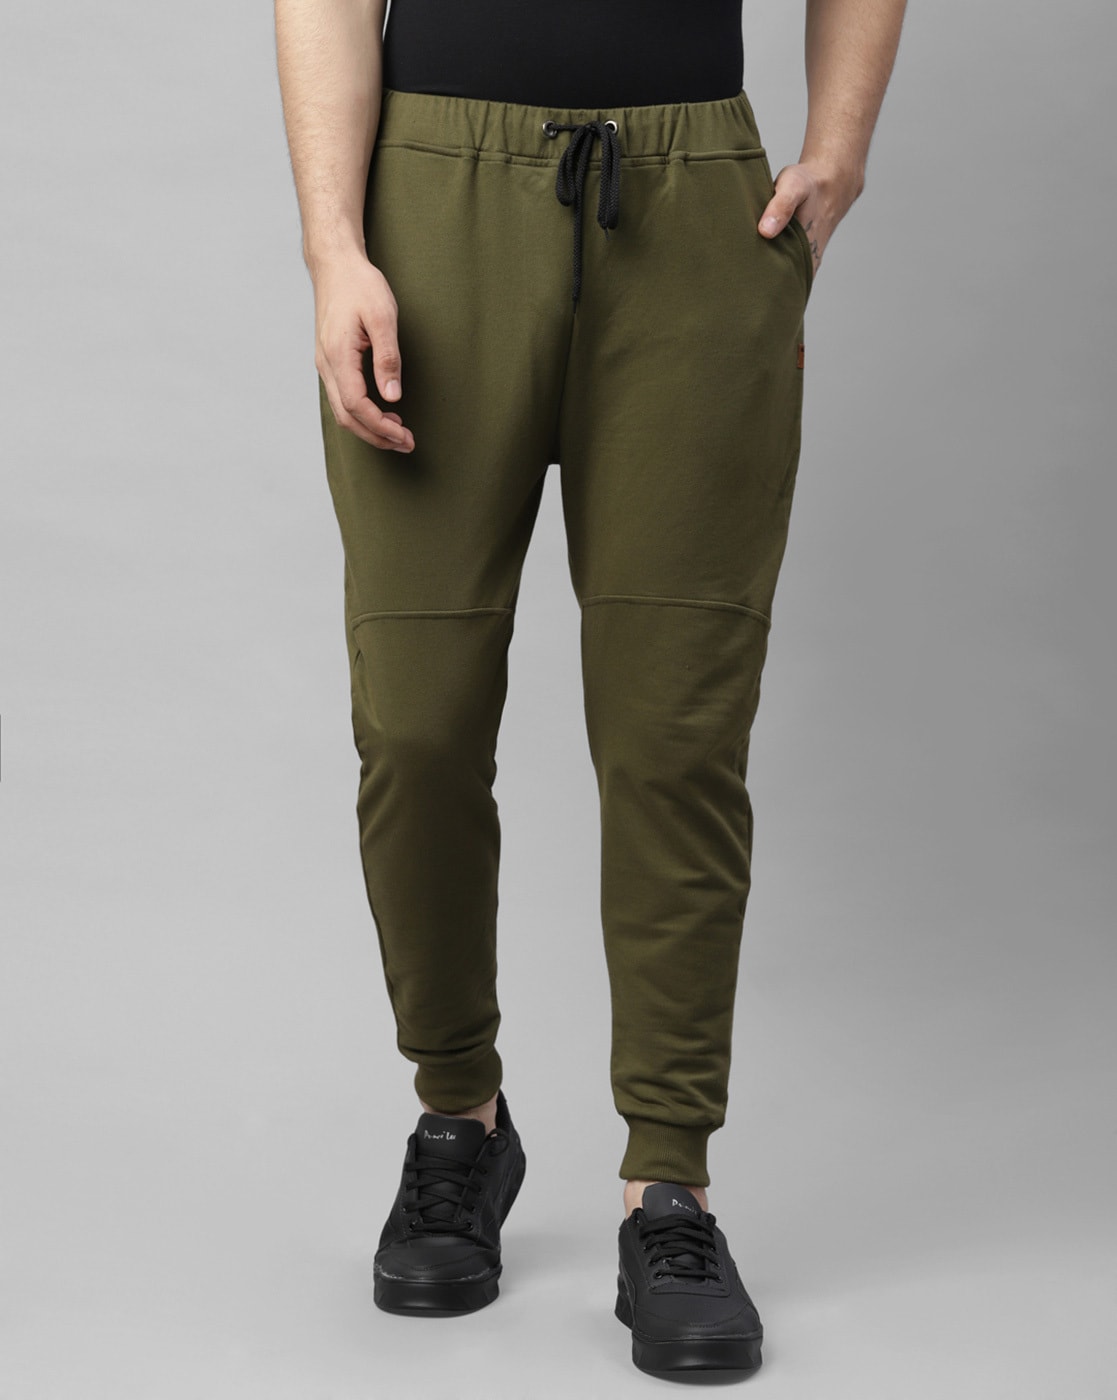 Buy Olive Green Track Pants for Men by RIGO Online